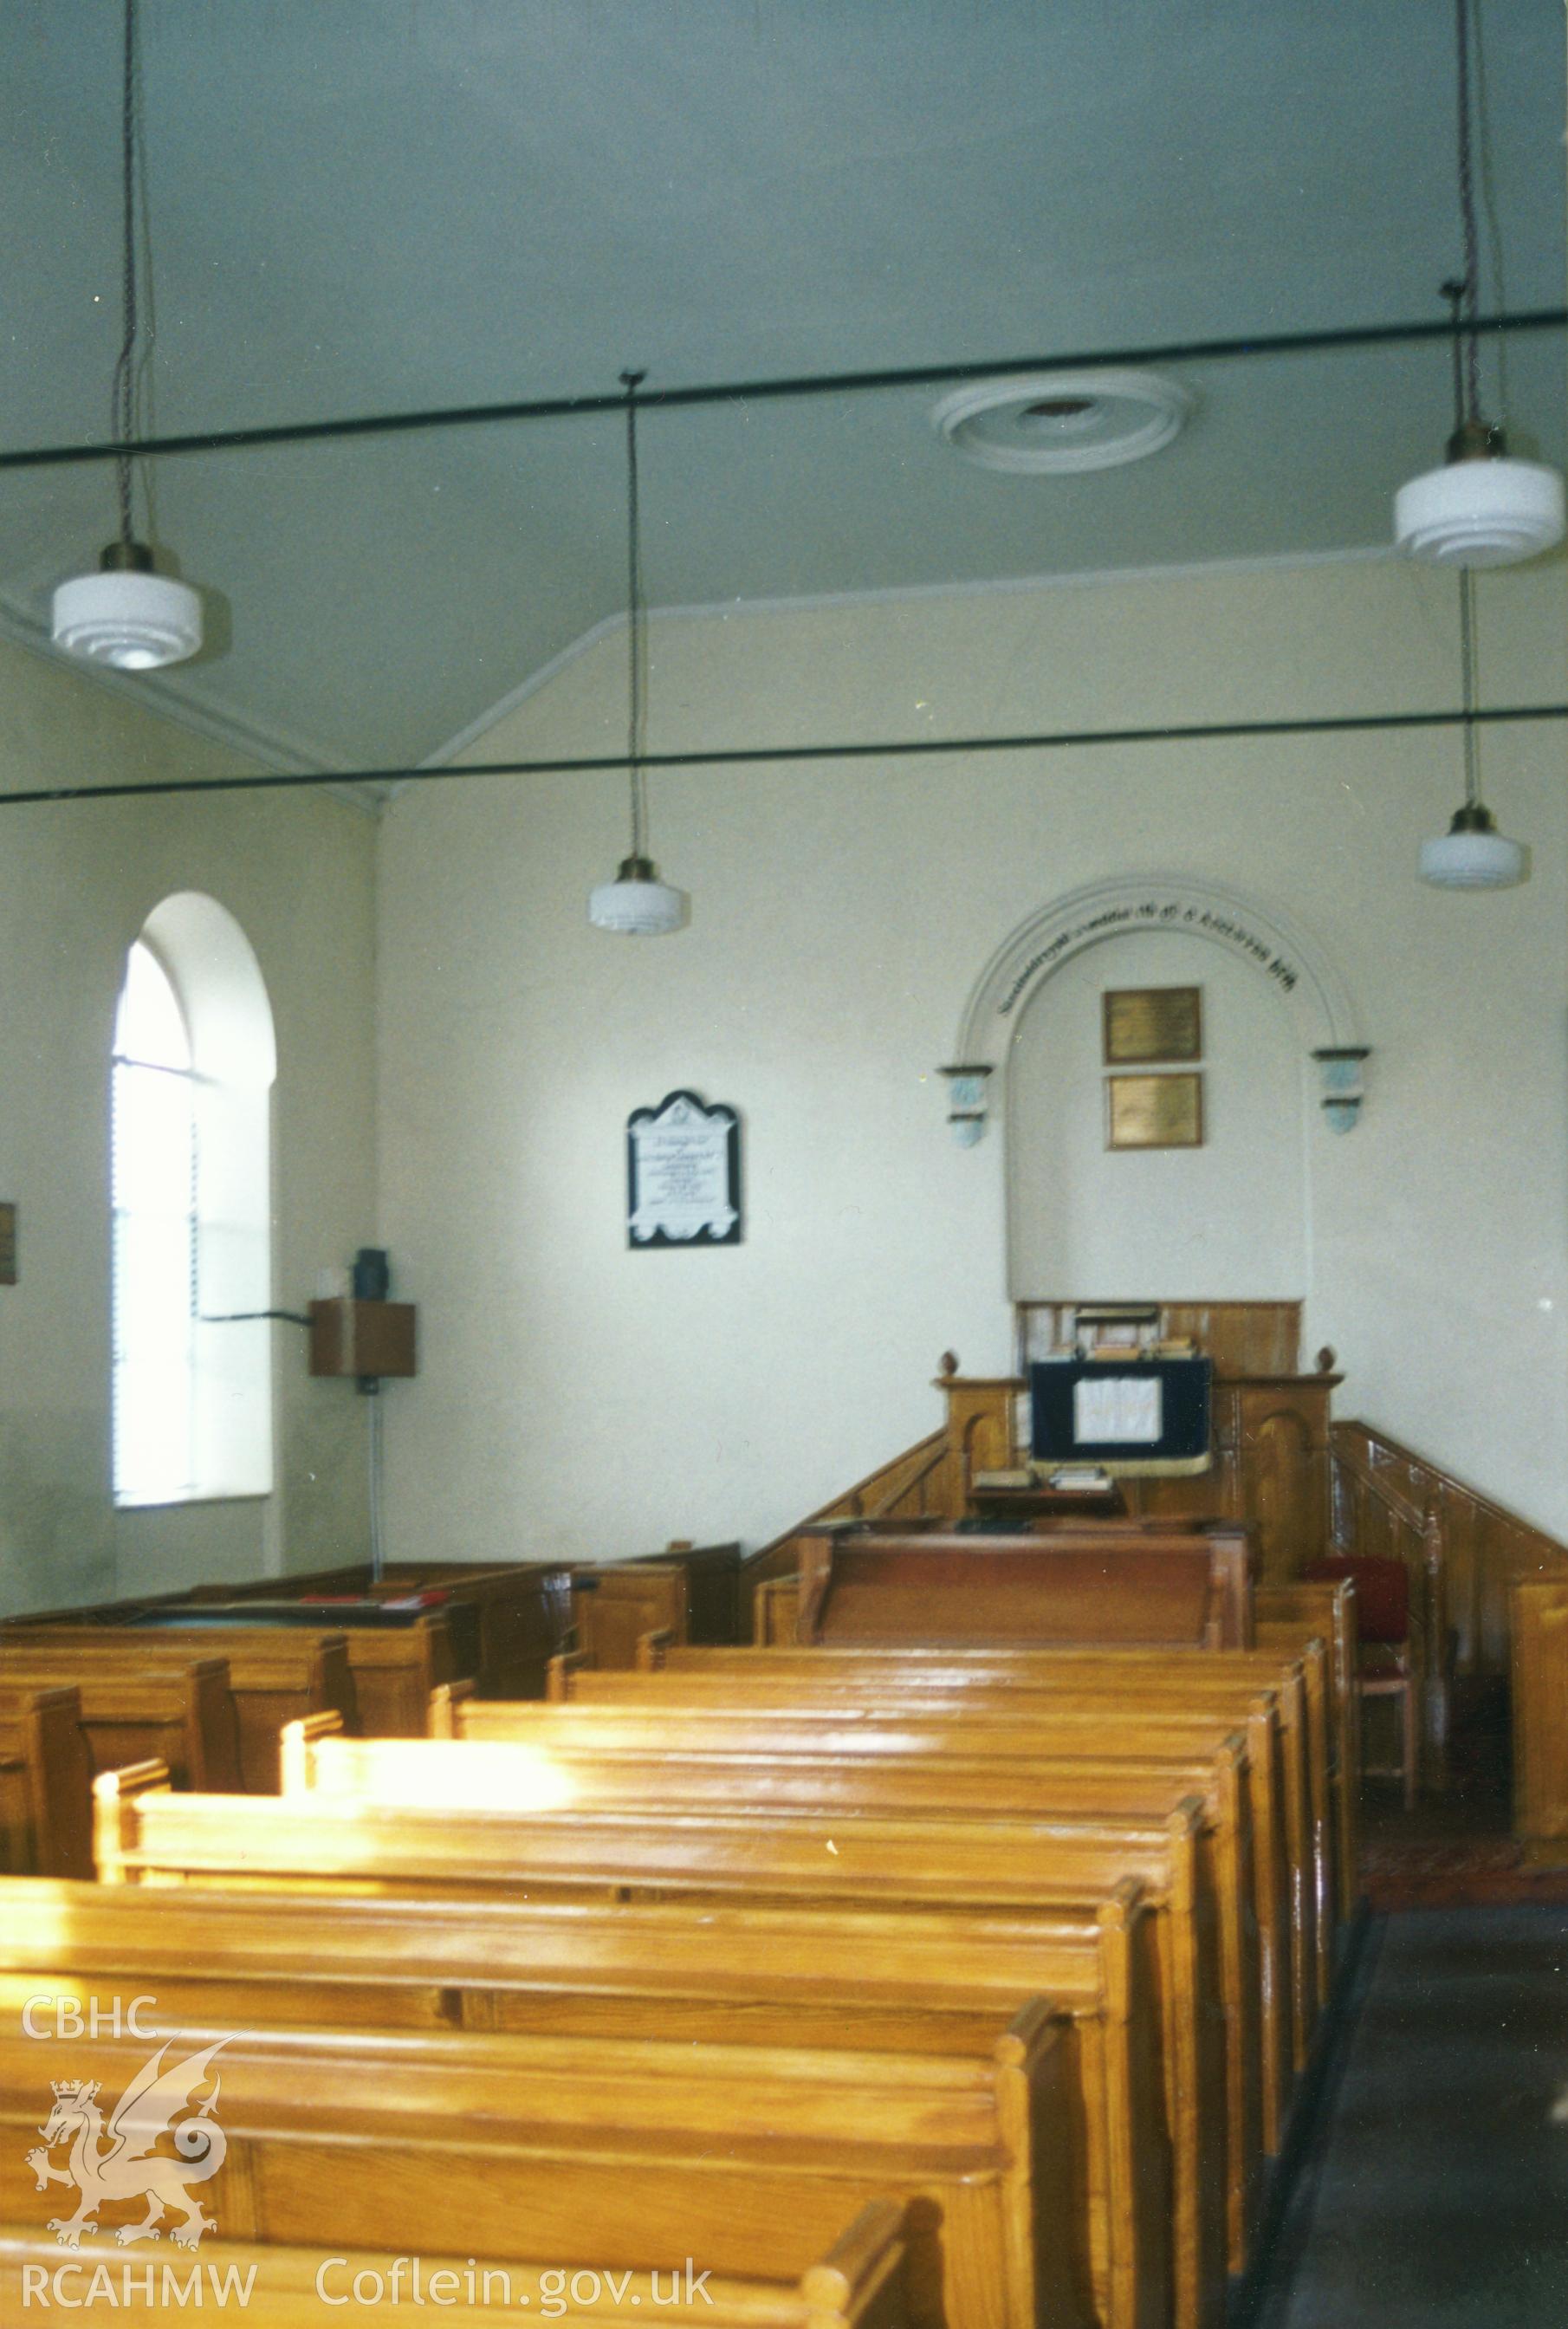 Digital copy of a colour photograph showing an exterior view of Pumpsaint Welsh Calvinistic Methodist Chapel, taken by Robert Scourfield, c.1996.